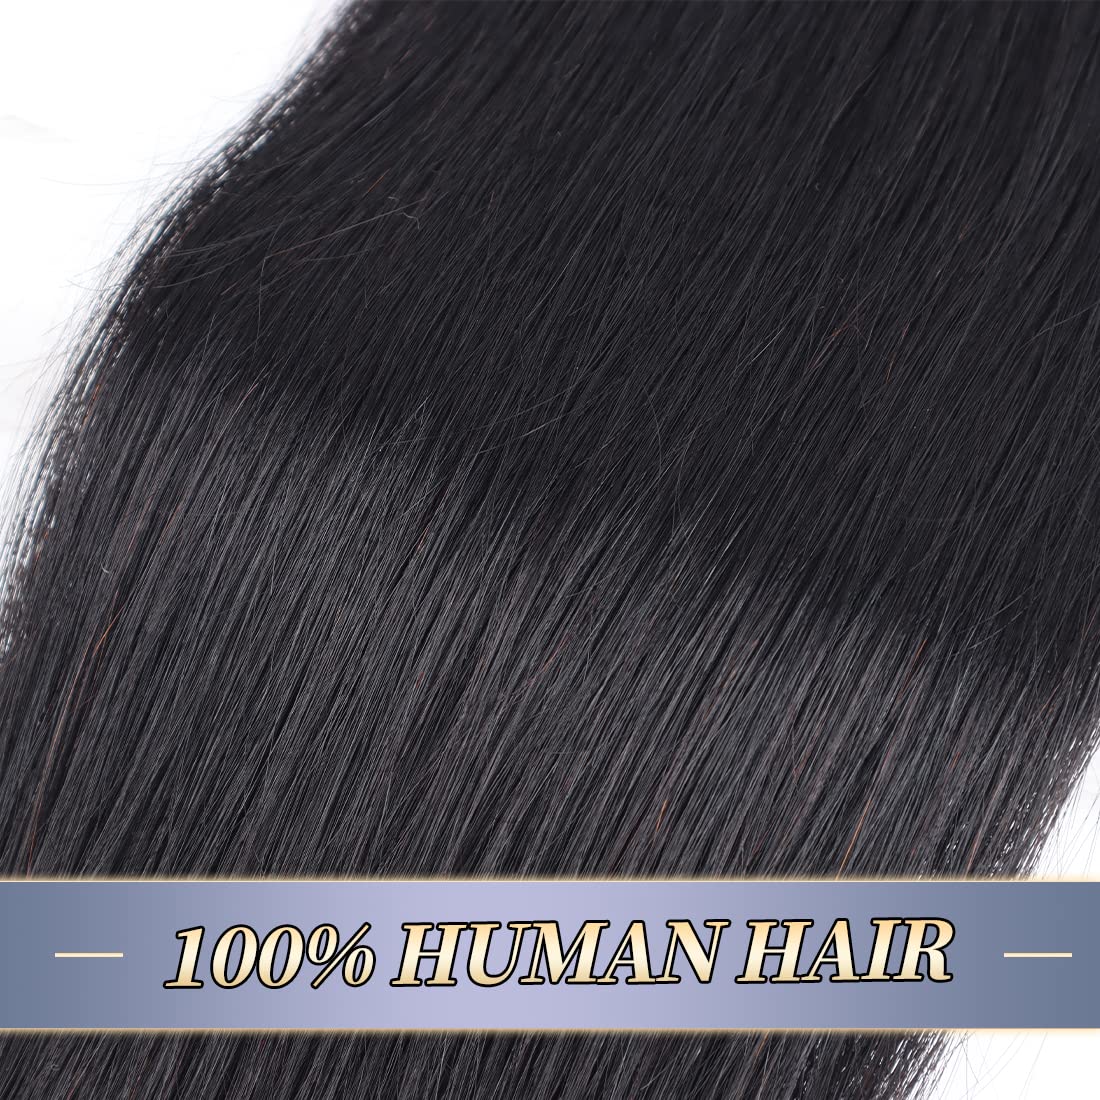 Lush Locks Ponytail Hair Extensions for Women